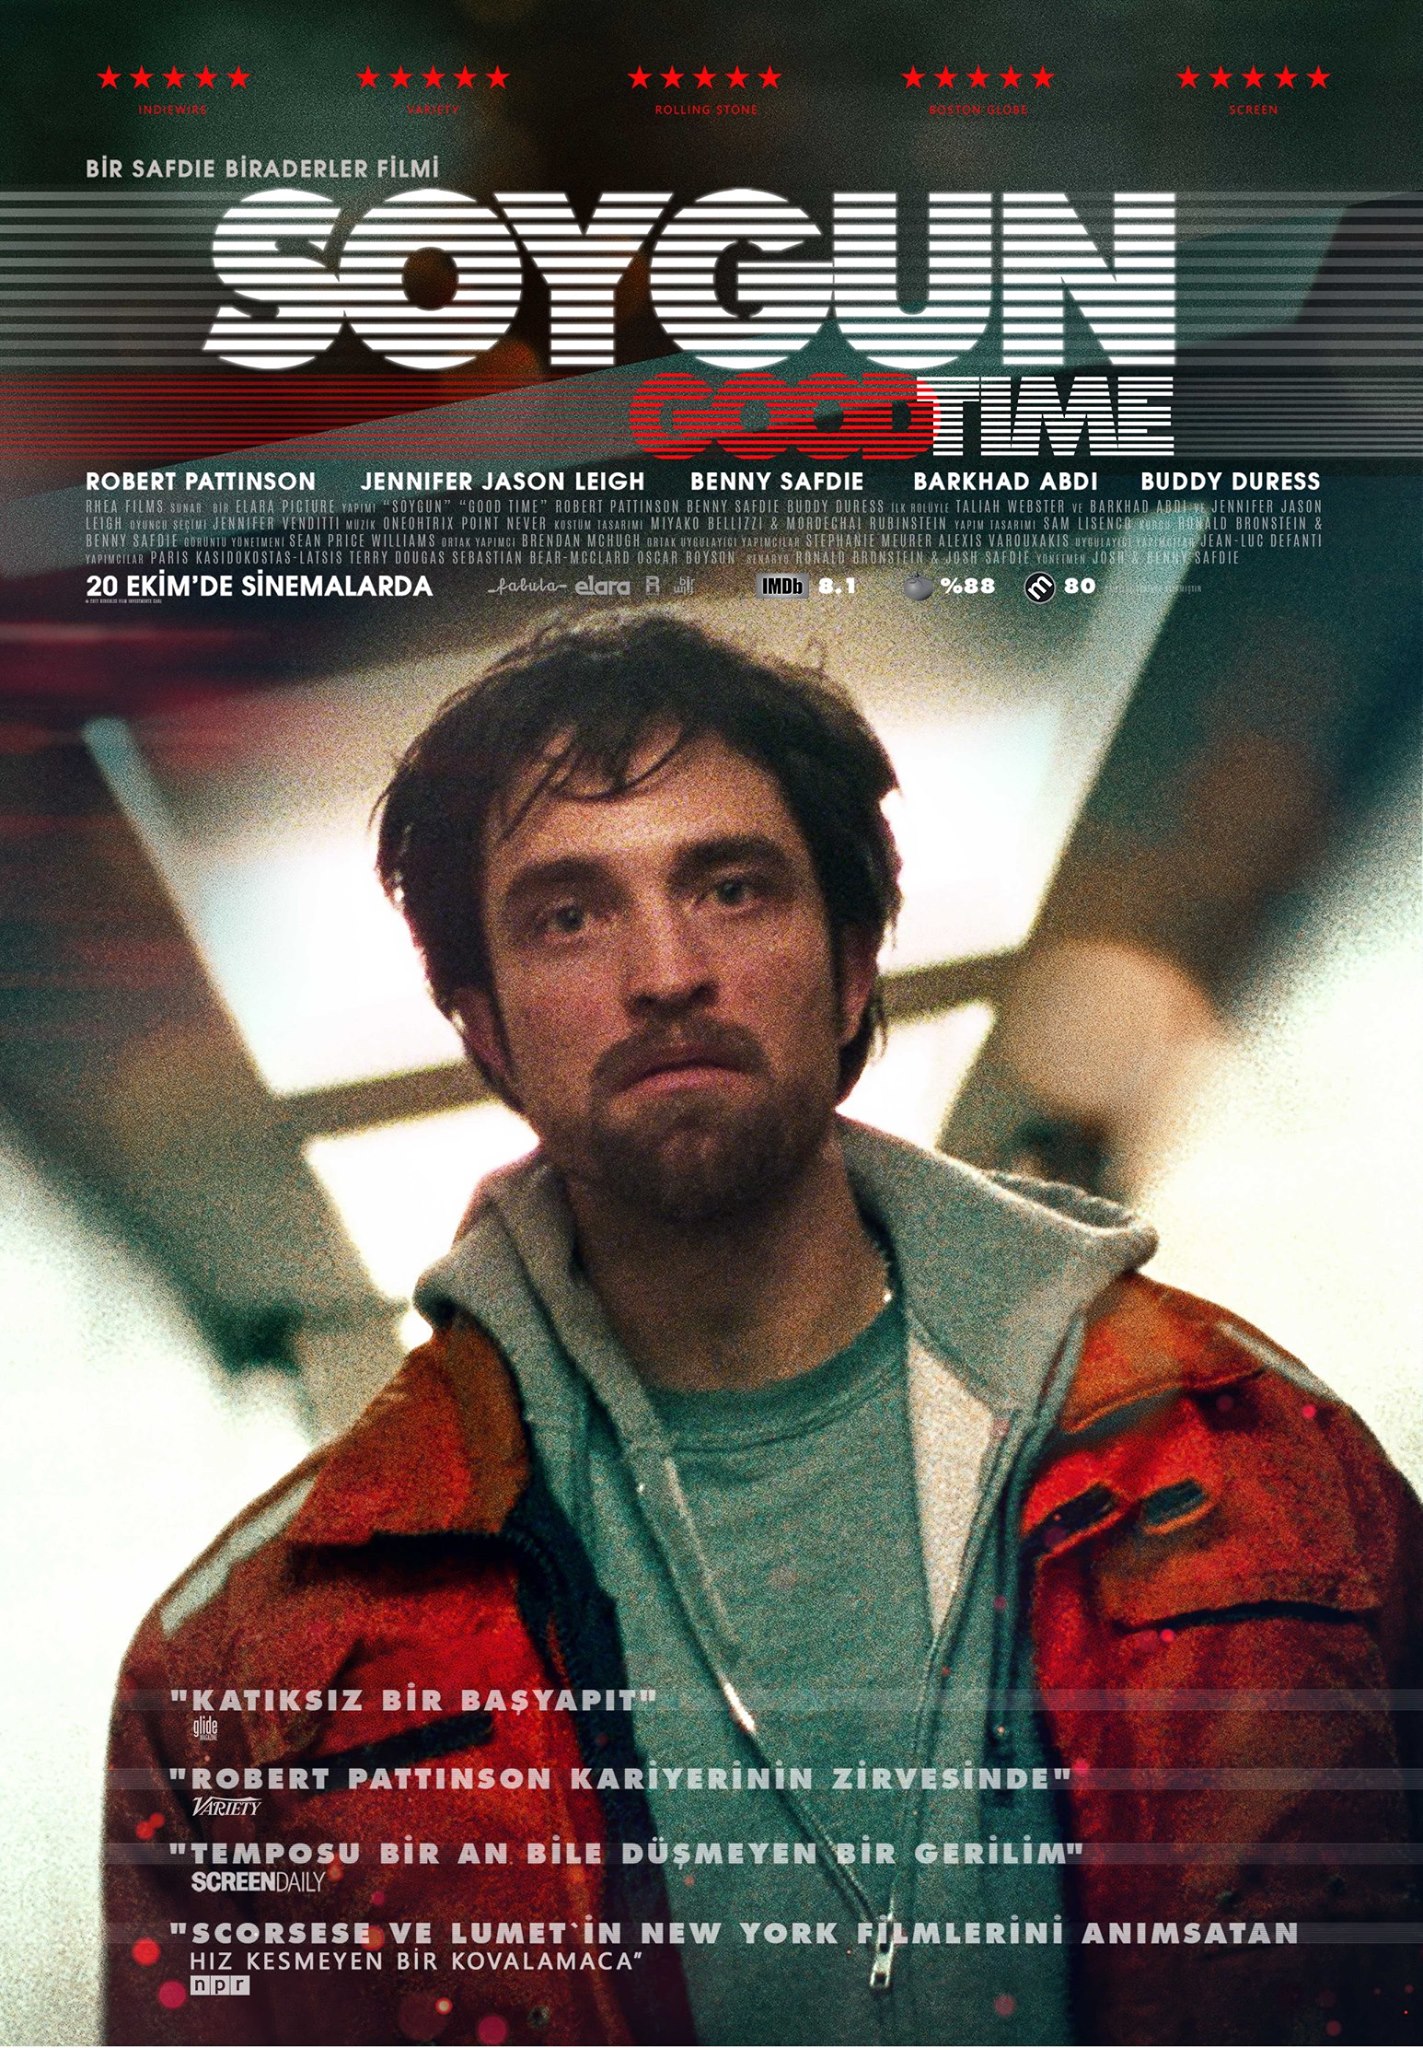 Robert Pattinson Australia Blog Archive Fabula Films (Turkey) Shares New HQ Theatrical Poster for #GoodTime